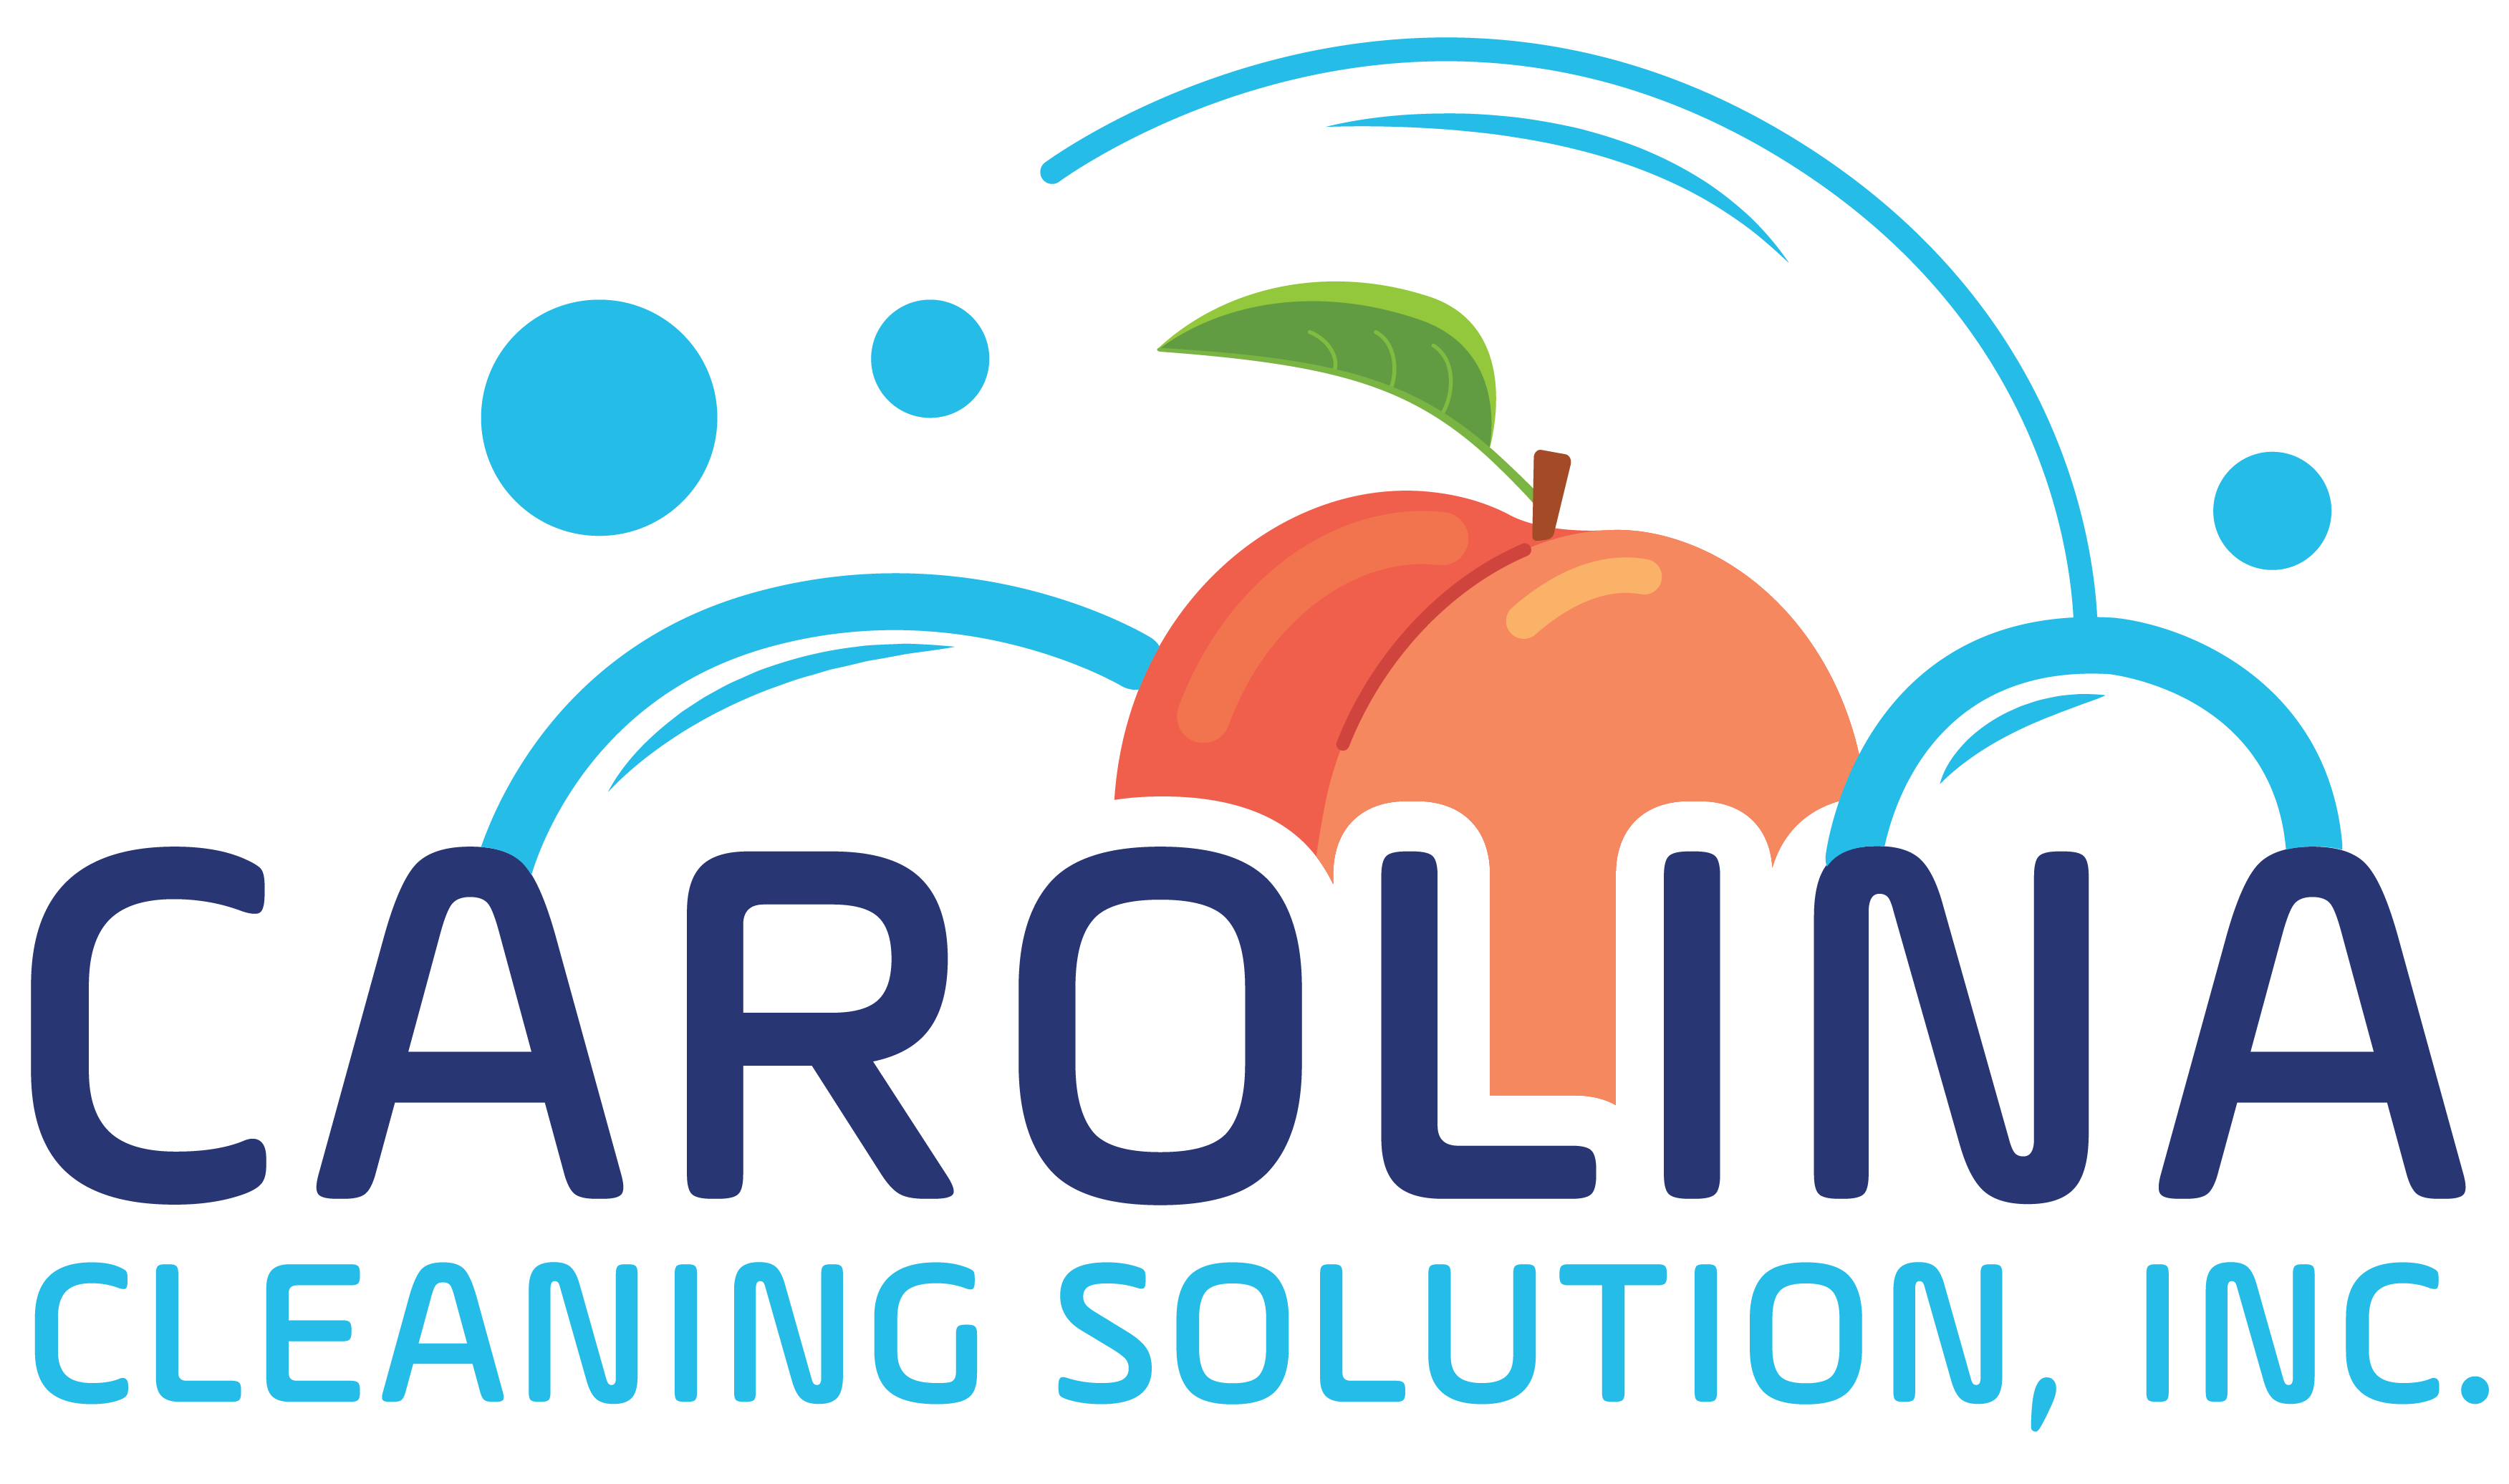 Carolina Cleaning Solution, Inc